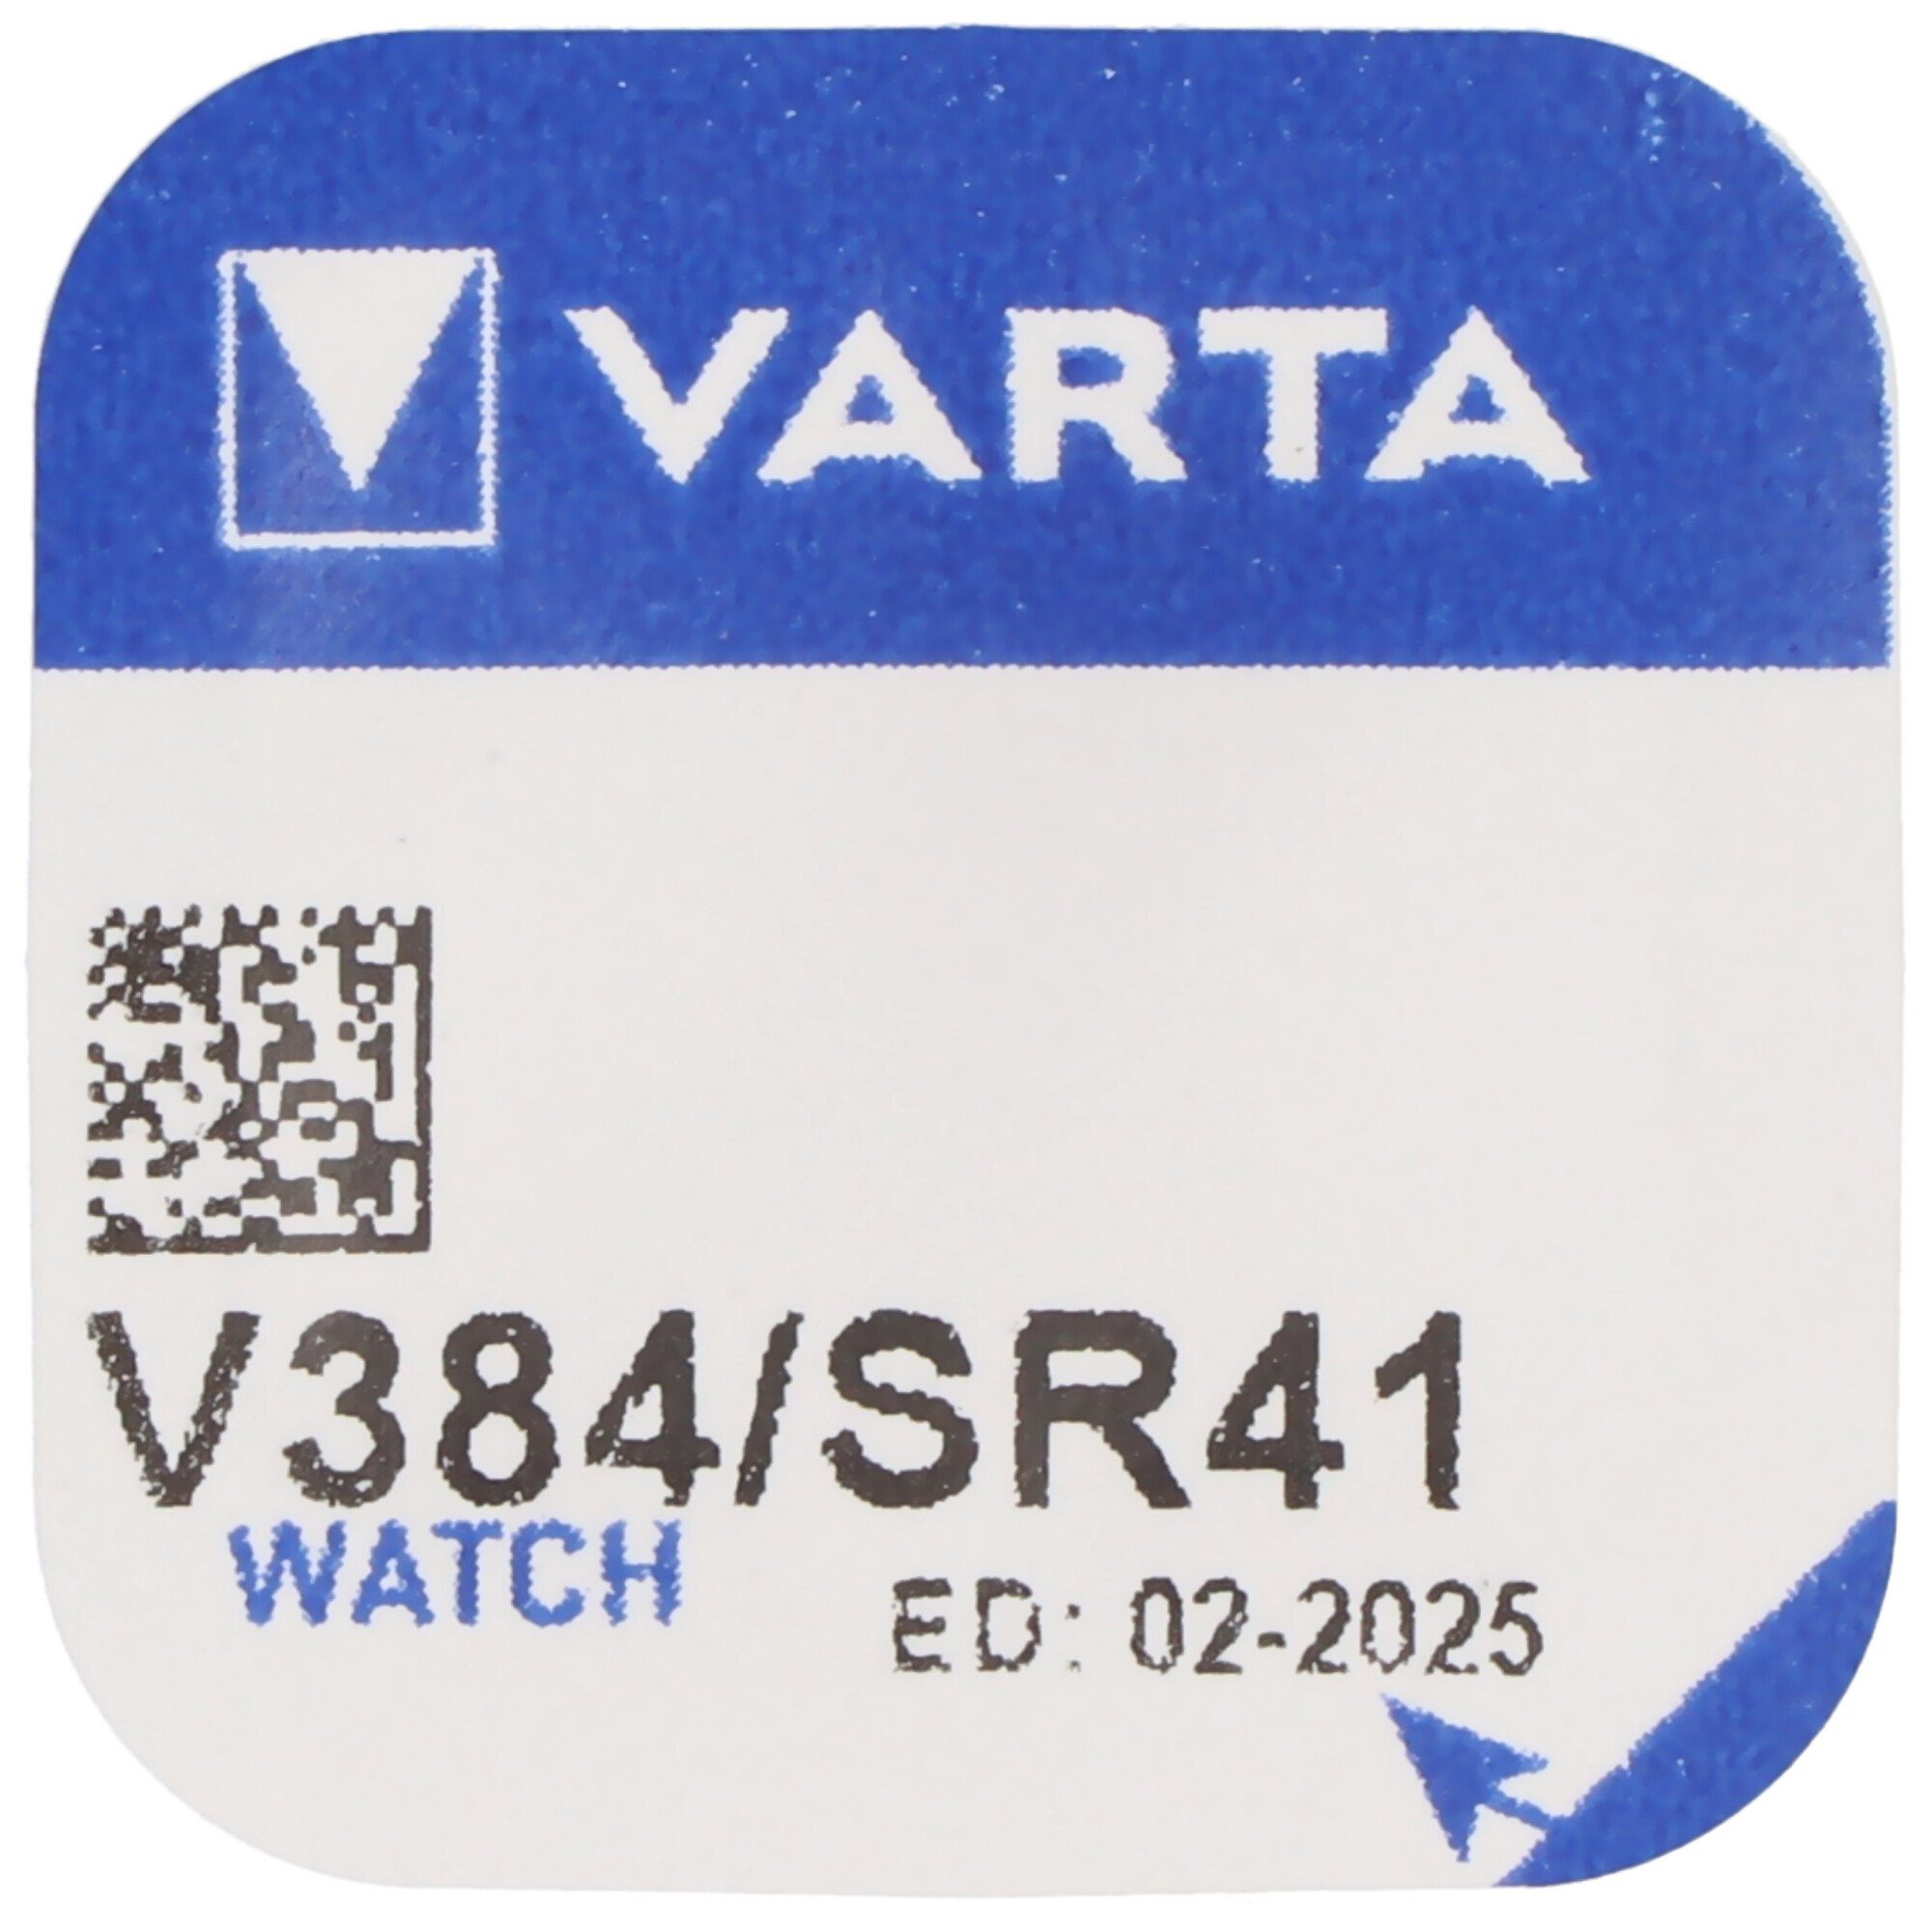 V384, Uhren Knopfzelle, V) 384, (1,6 SR41SW, GP192 SR41, etc. Knopfzelle für VARTA Varta